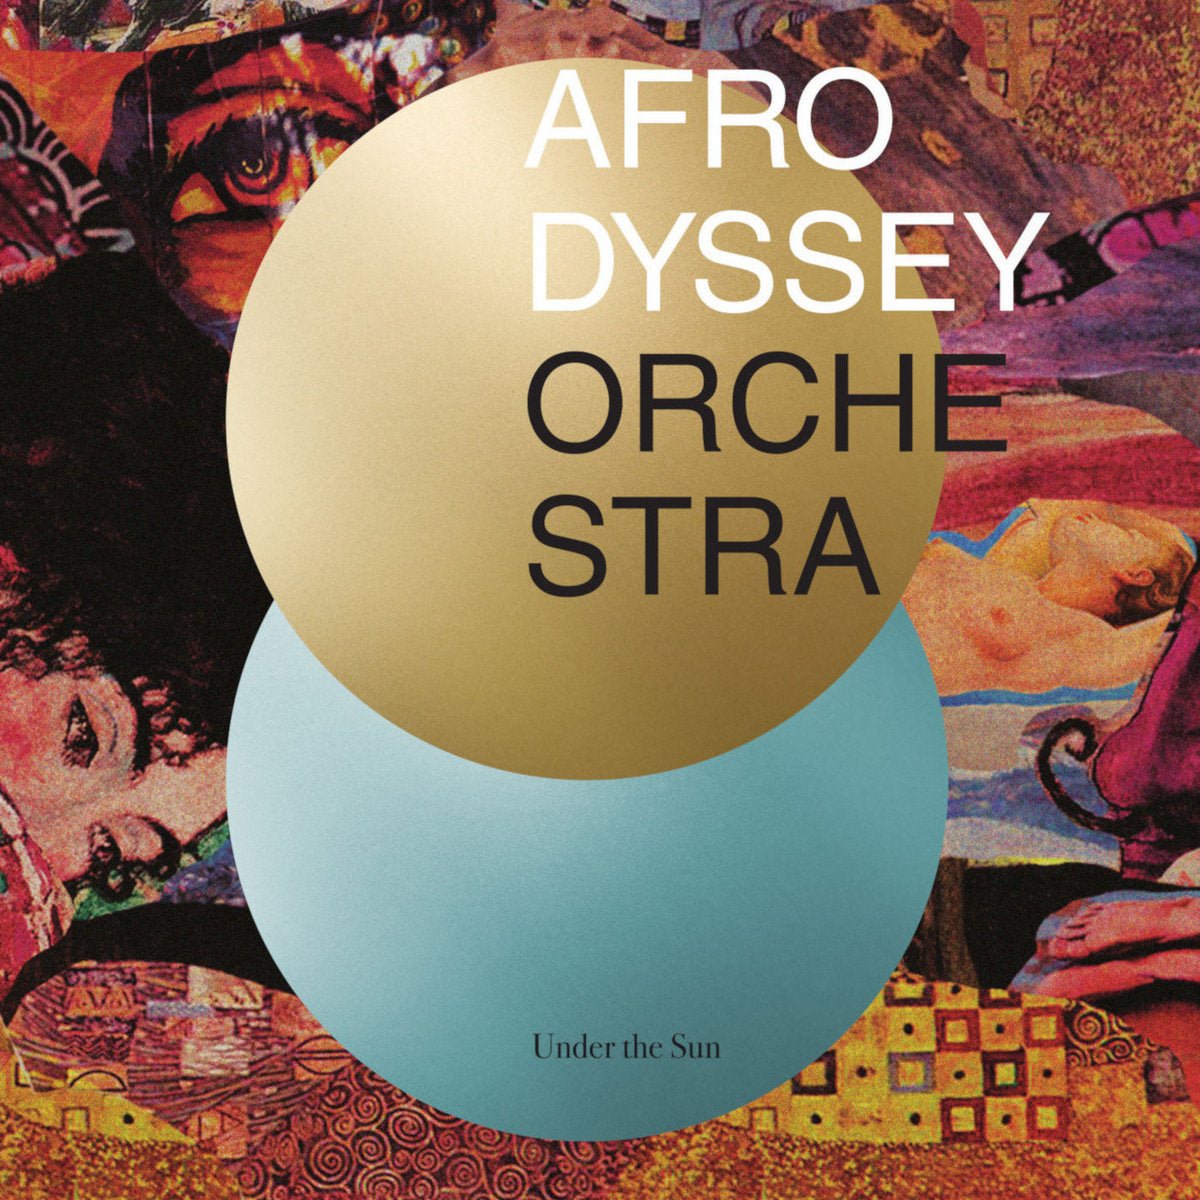 Afrodyssey Orchestra - Under the Sun - Vinyl - LP - 33RPM